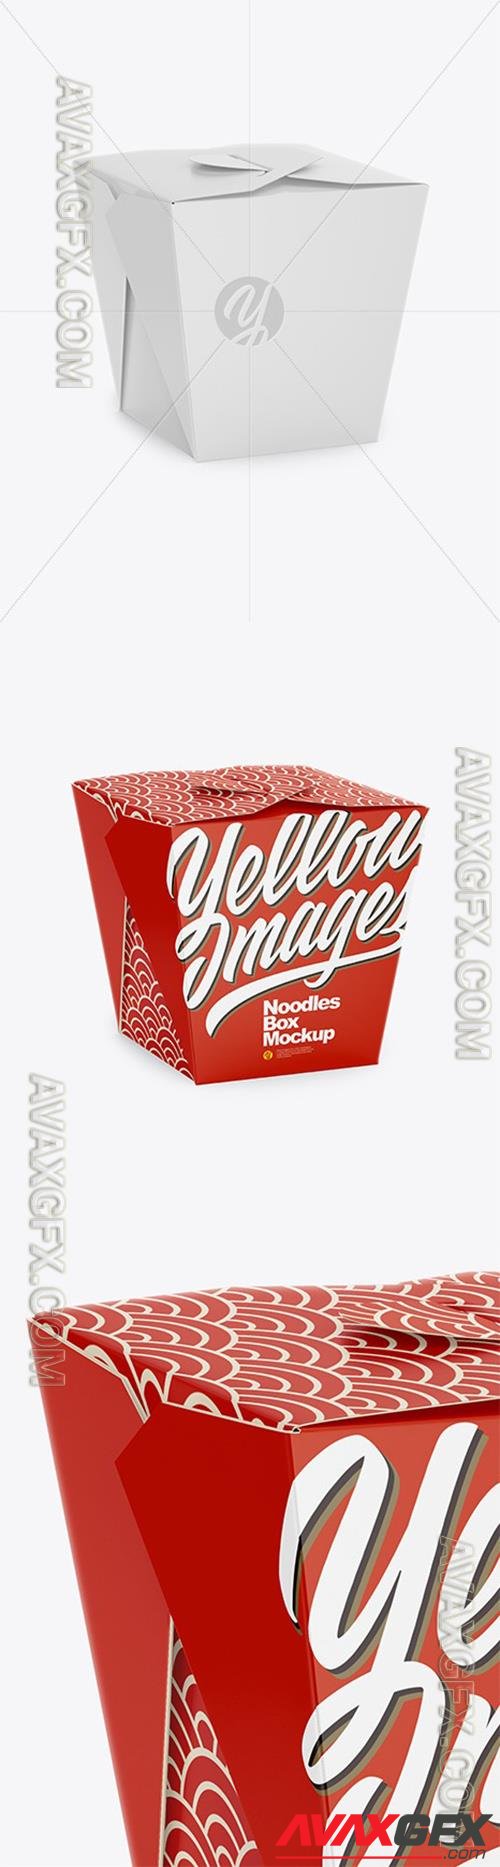 Matte Paper Noodles Box Mockup - Half Side View (High Angle Shot) 65435 TIF